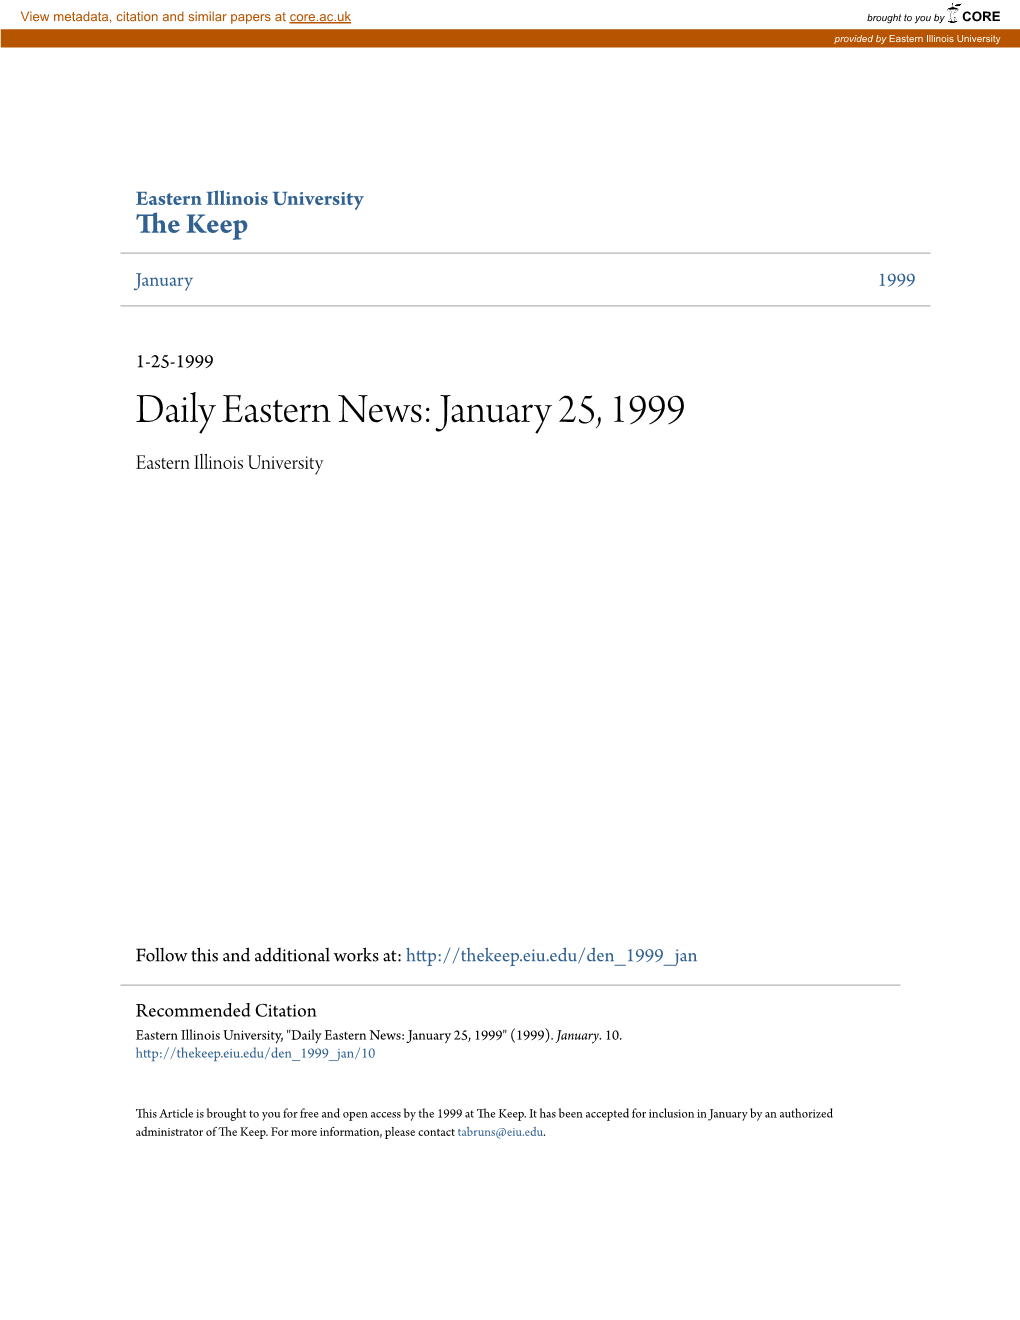 Daily Eastern News: January 25, 1999 Eastern Illinois University